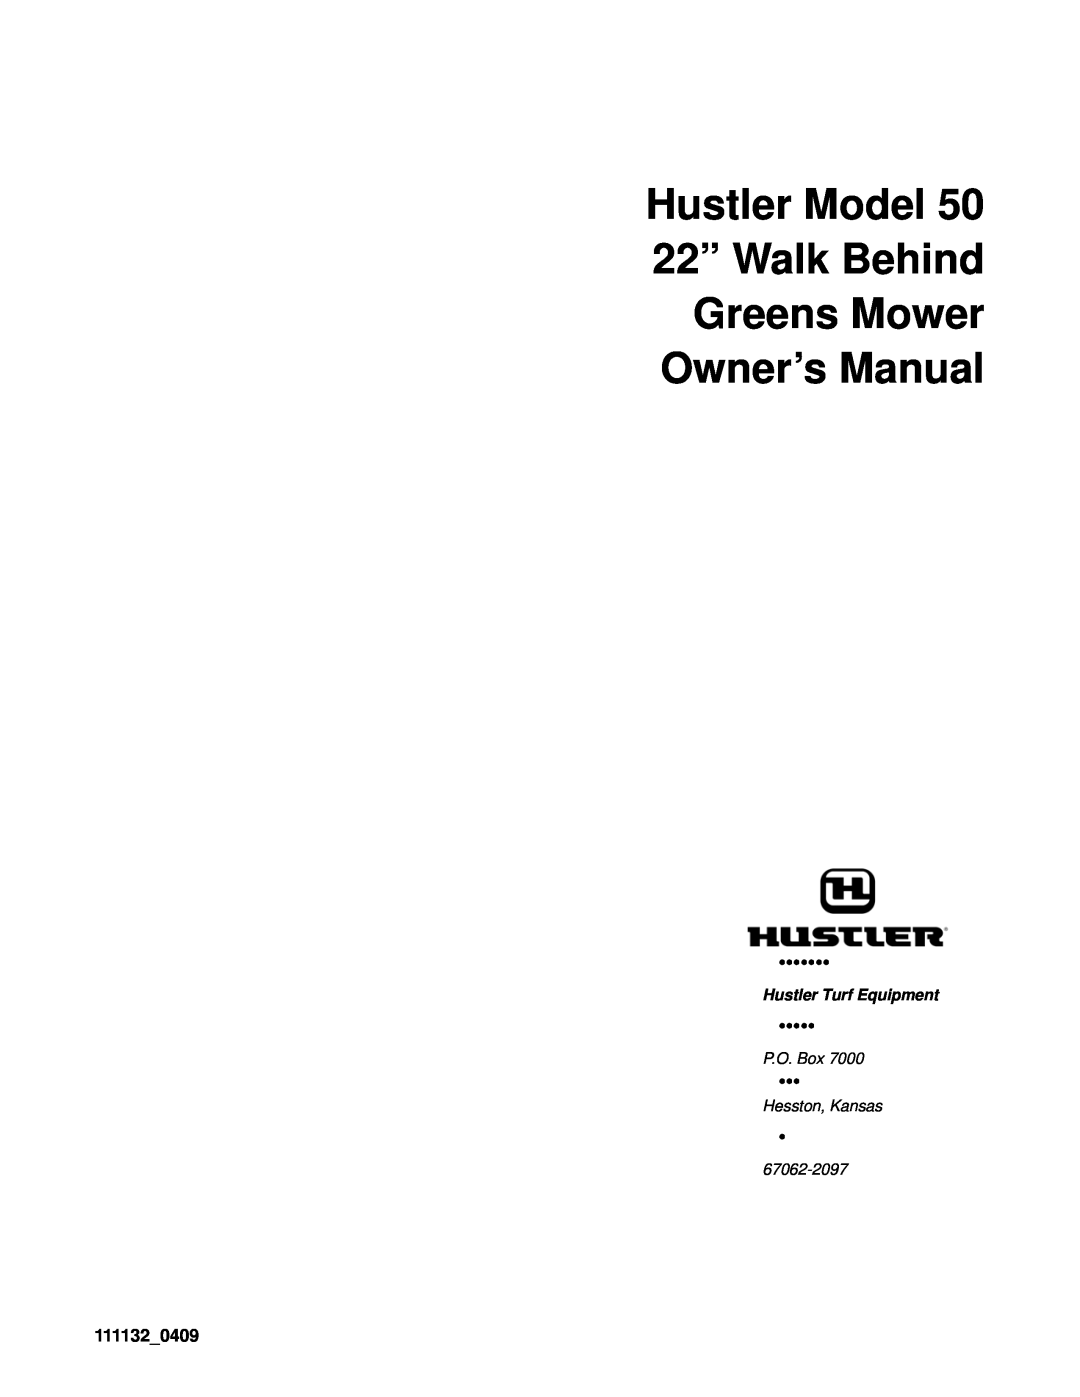 Hustler Turf 50 owner manual •••••••, 111132_0409, Hustler Model 22” Walk Behind Greens Mower, Owner’s Manual, P.O. Box 